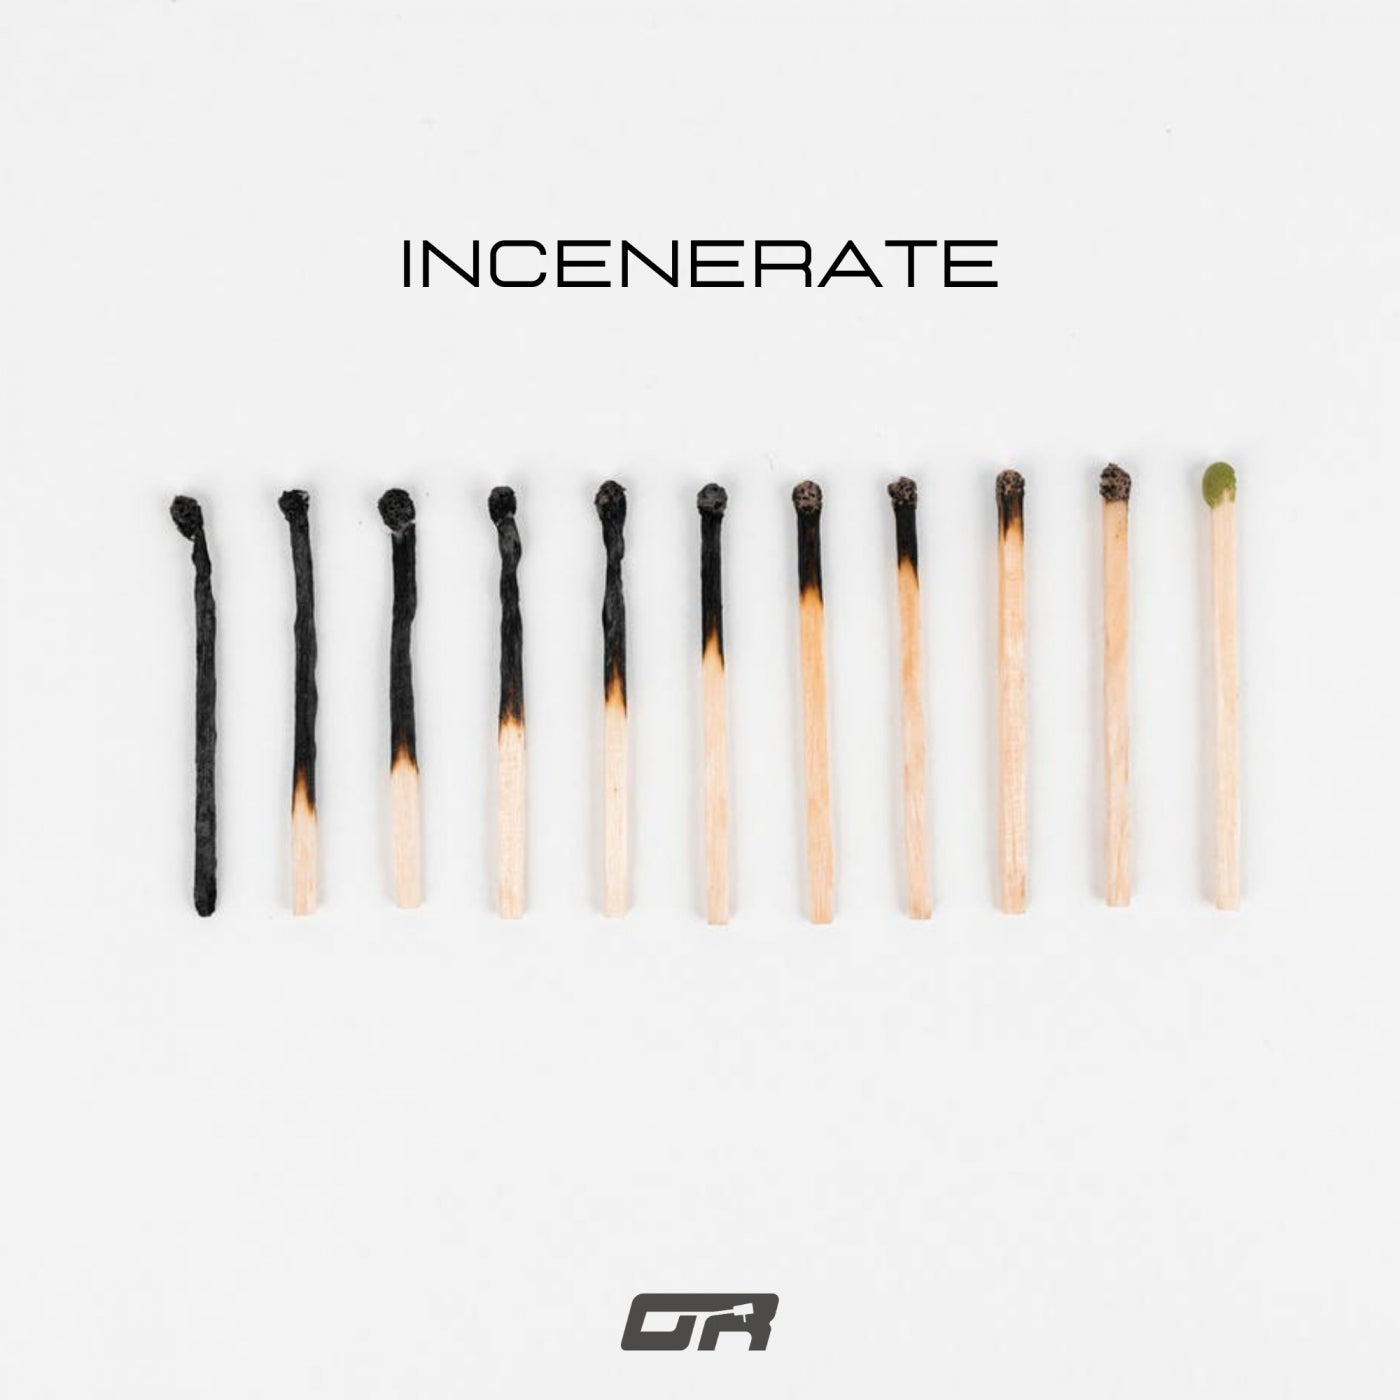 VA - Incenerate [Graba Music]